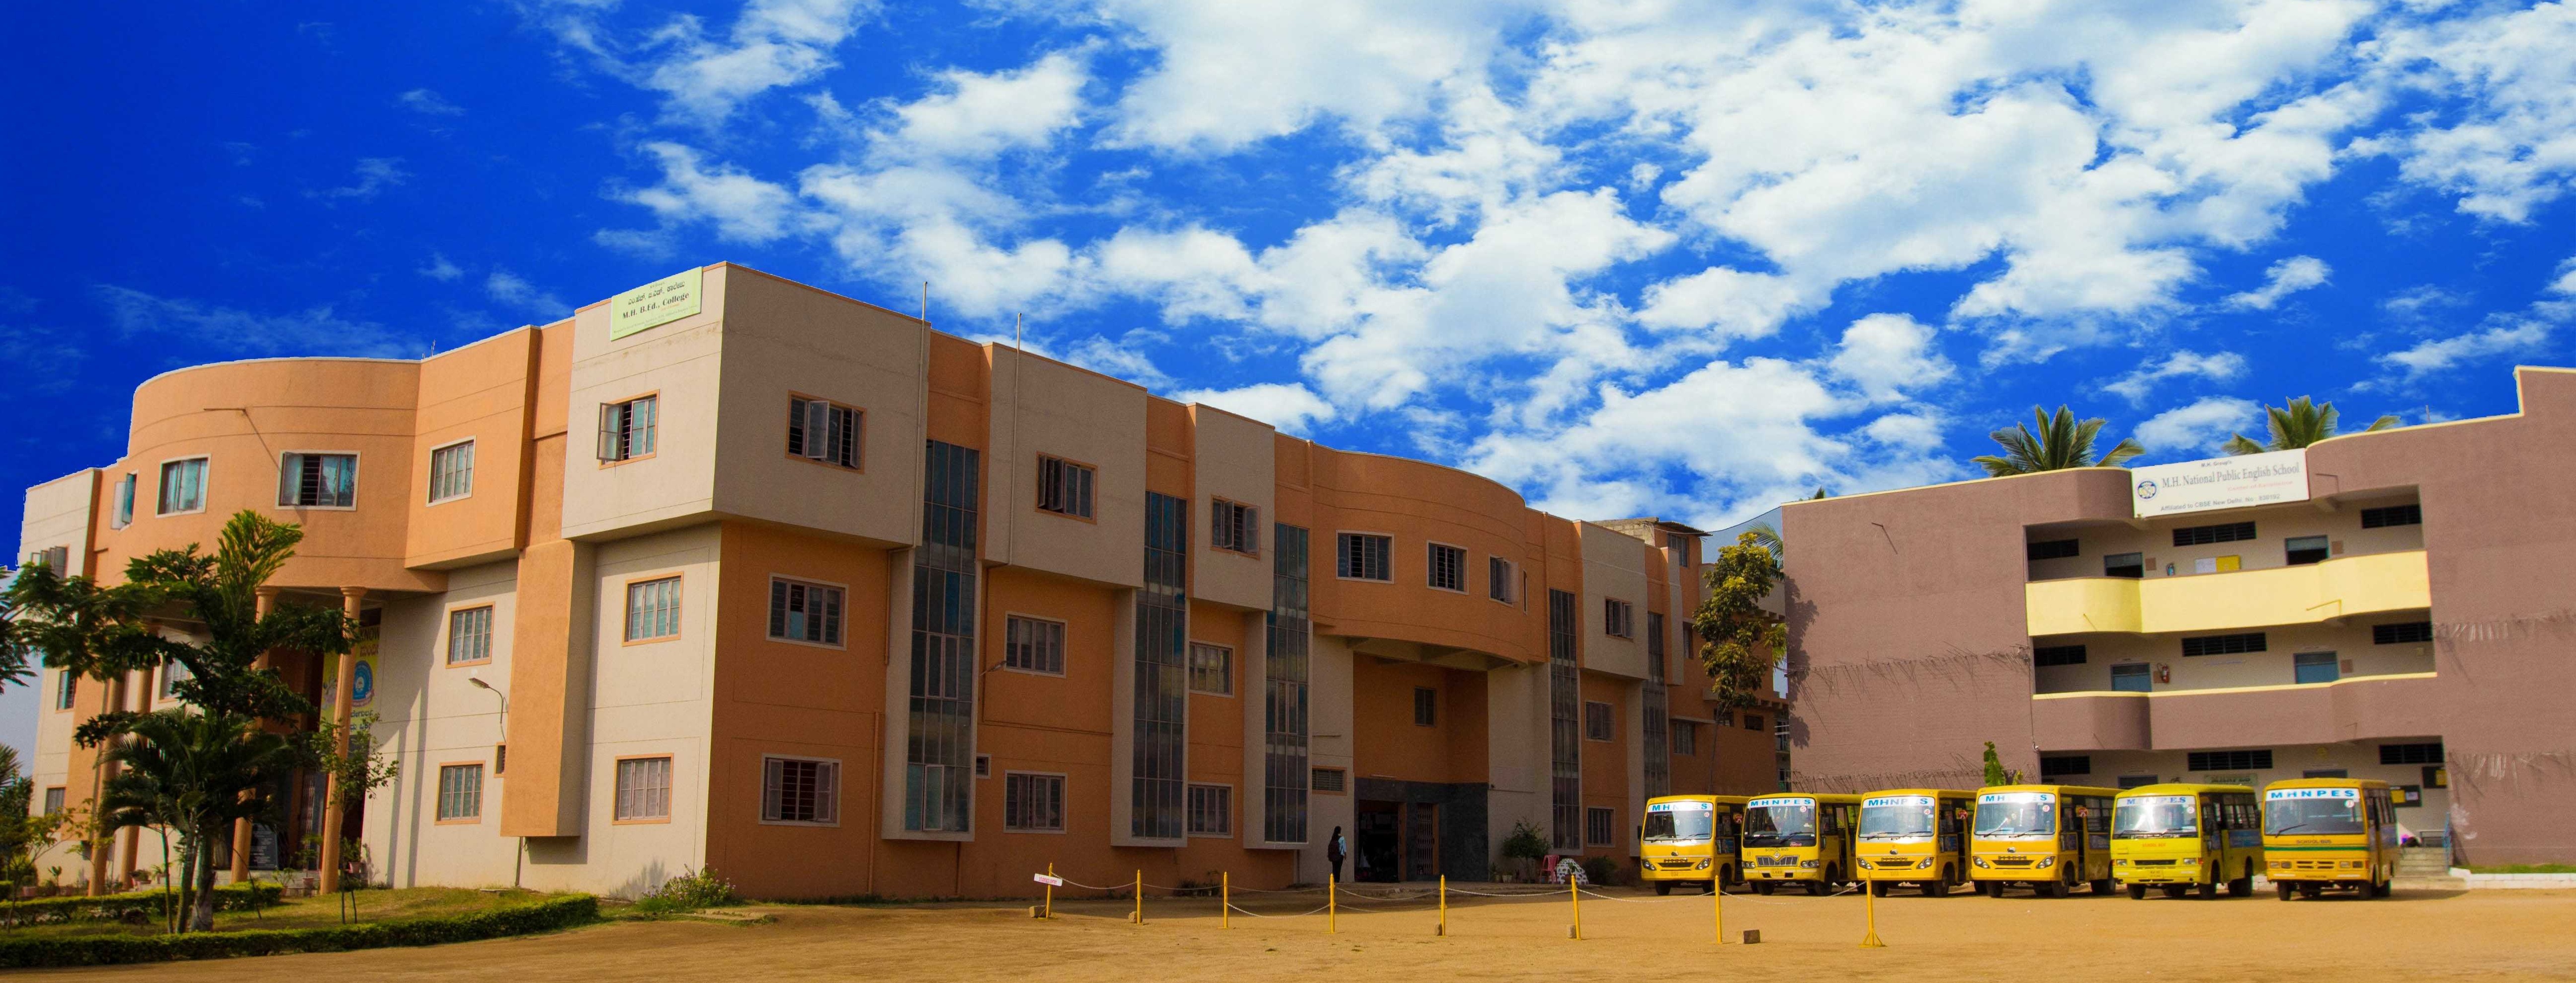 M.H. College of Law, Ramanagara Image